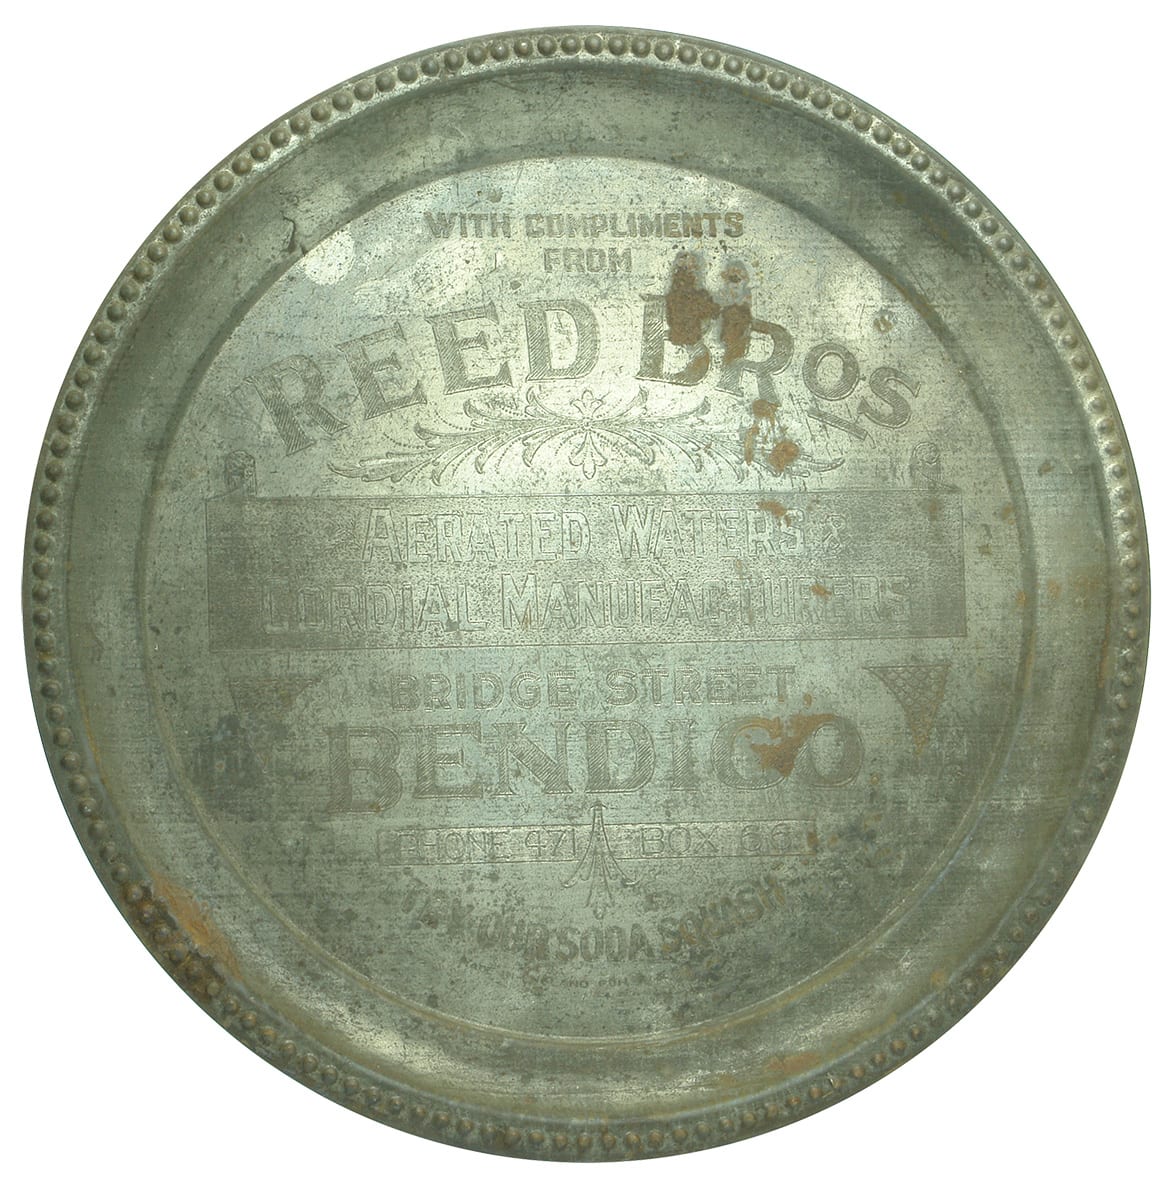 Reed Bros Aerated Water Cordial Manufacturers Bendigo Serving Tray